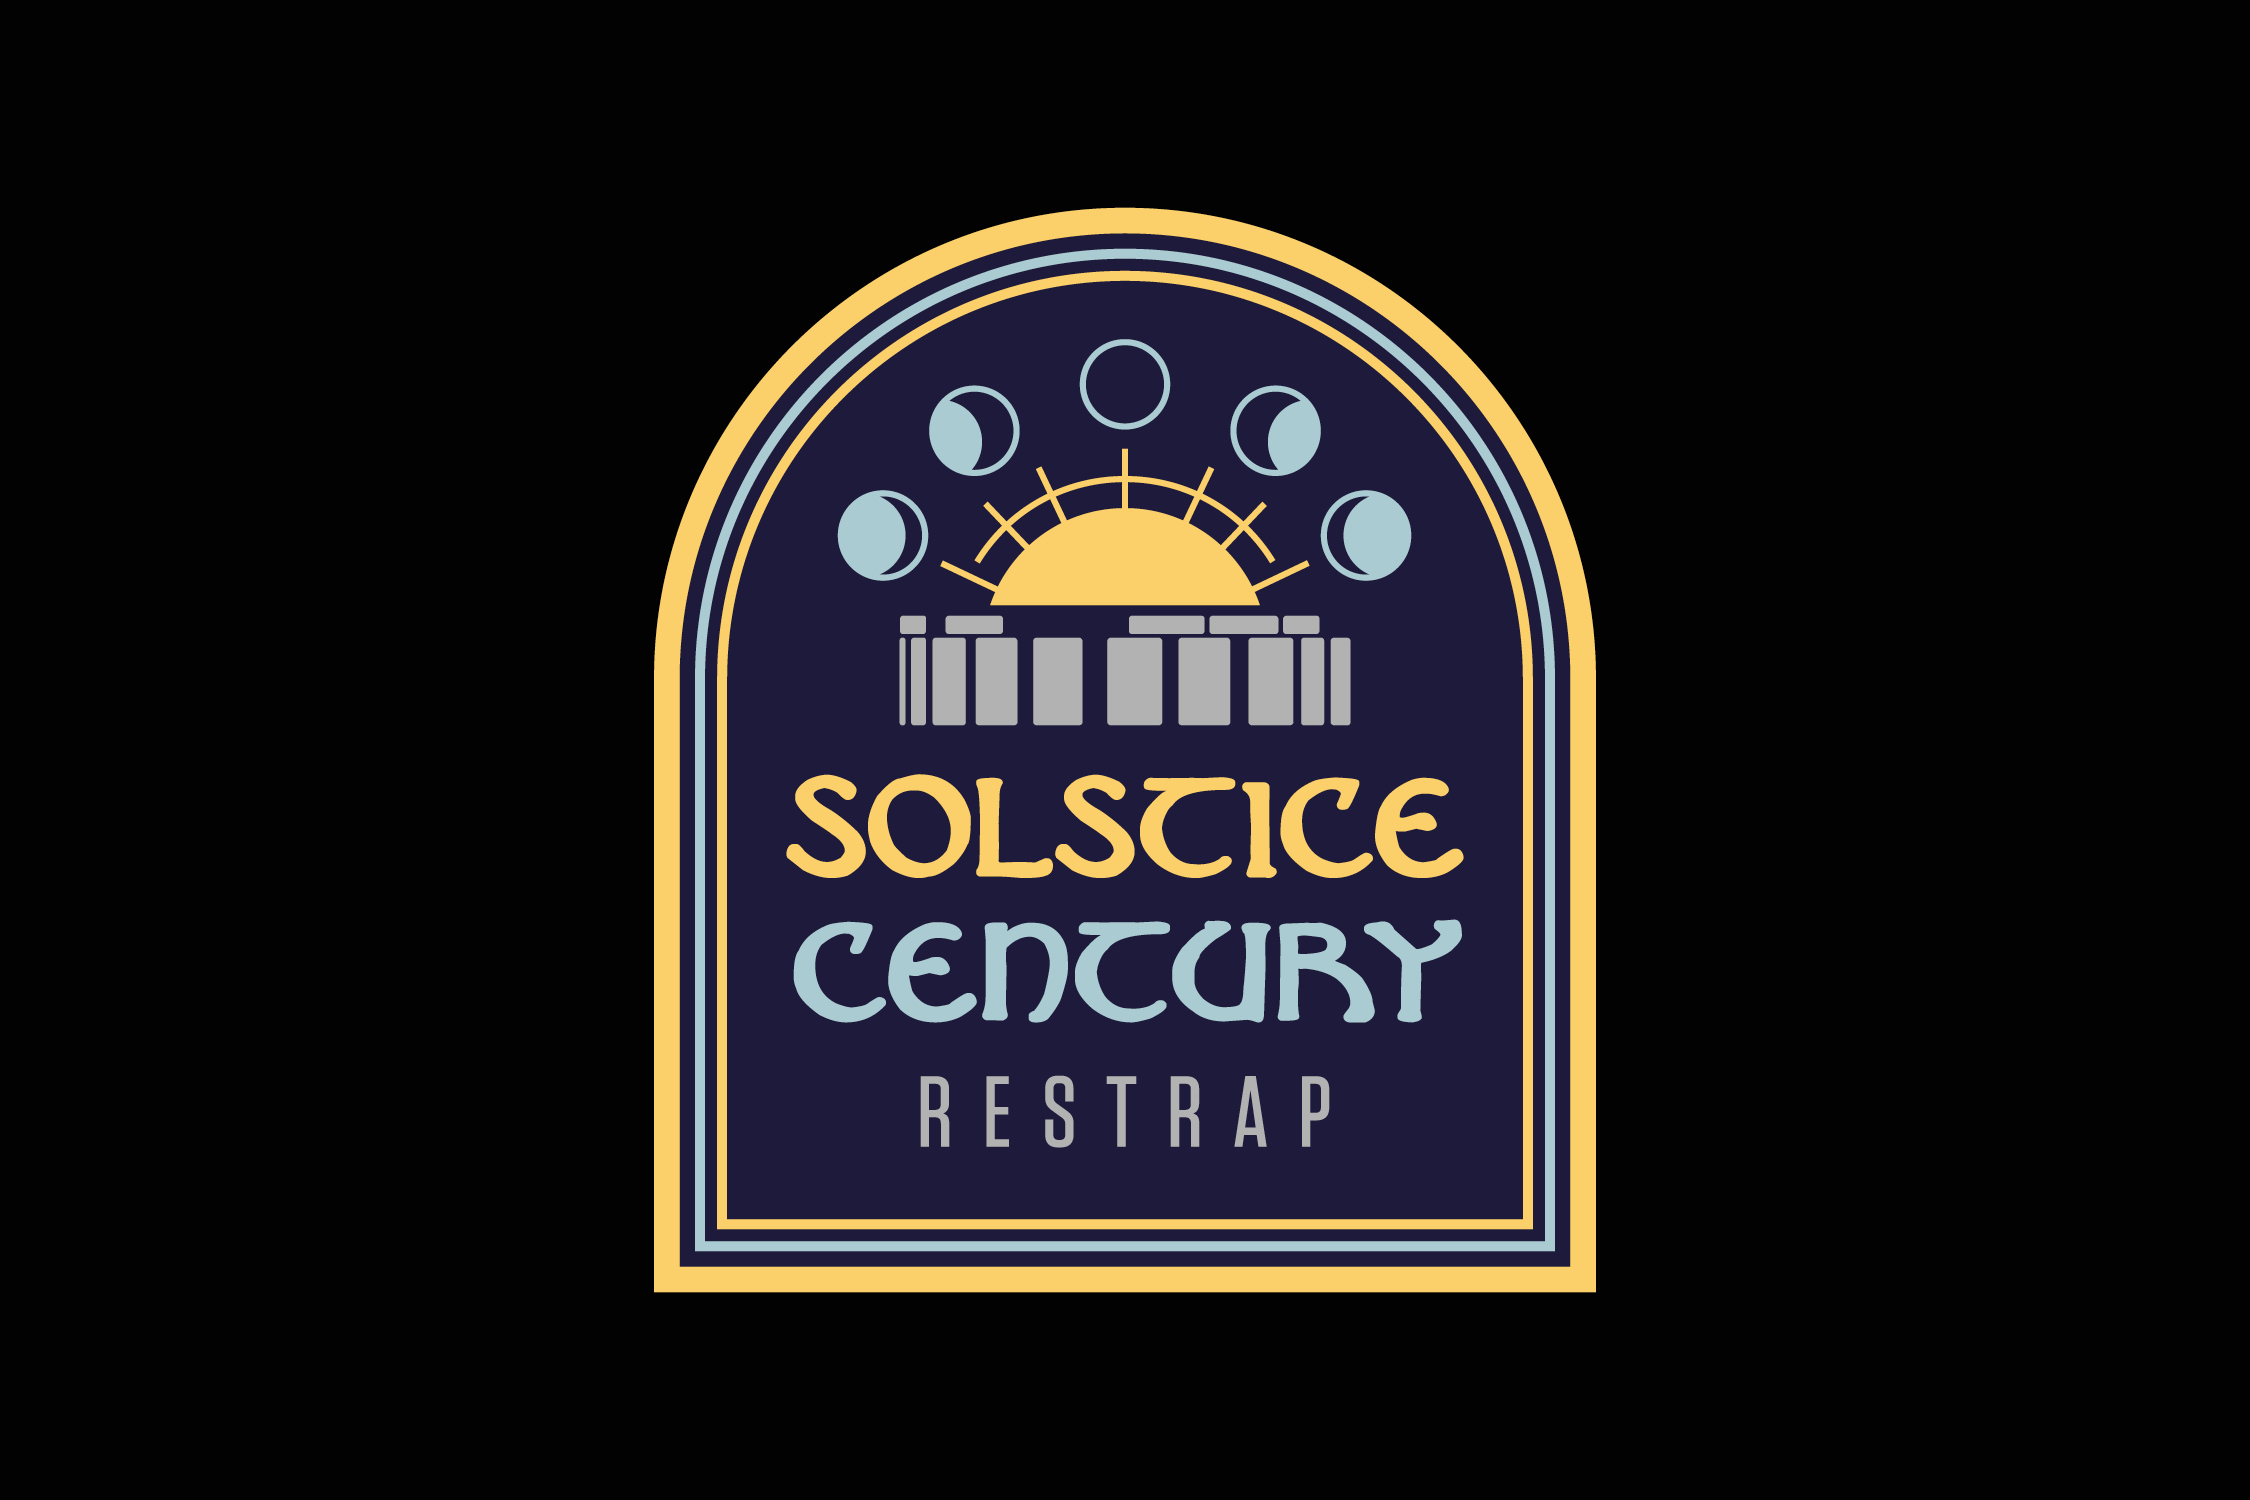 Restrap Solstice Century challenge